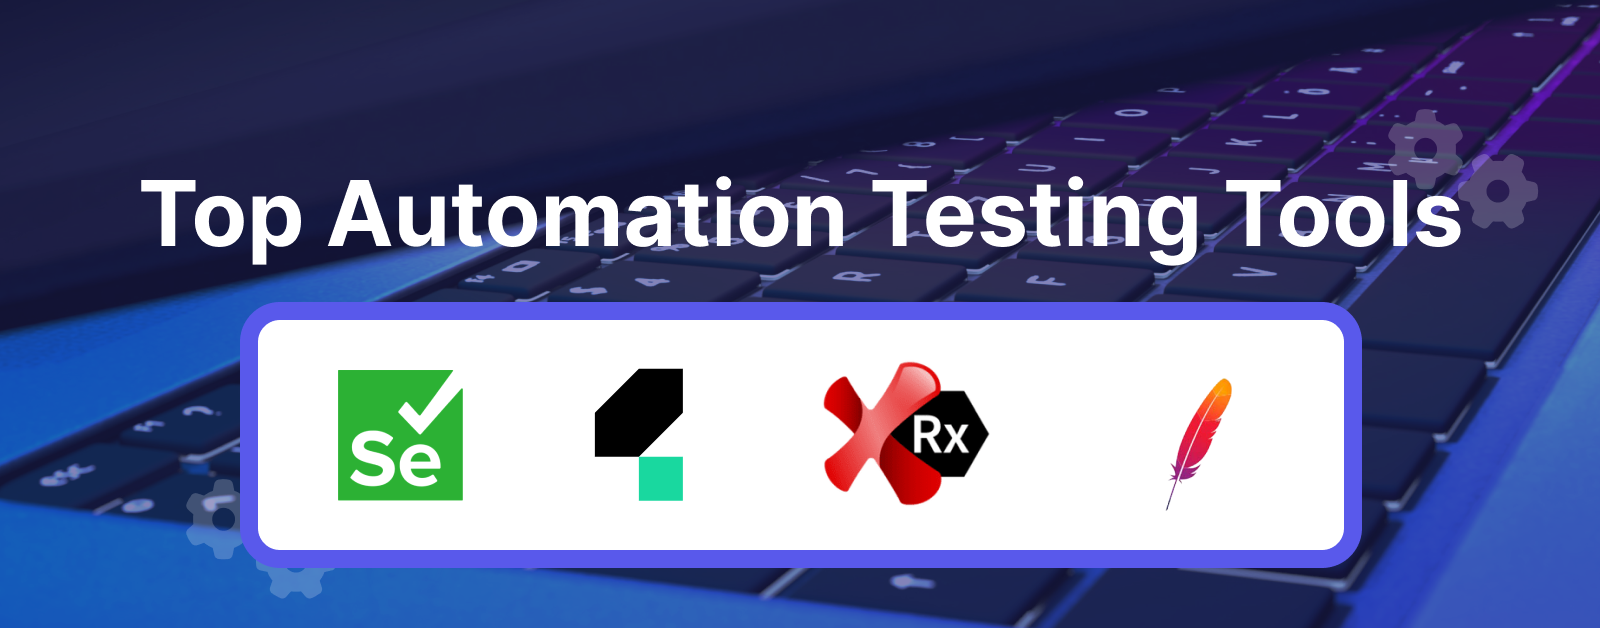 Top automation testing tools | Katalon